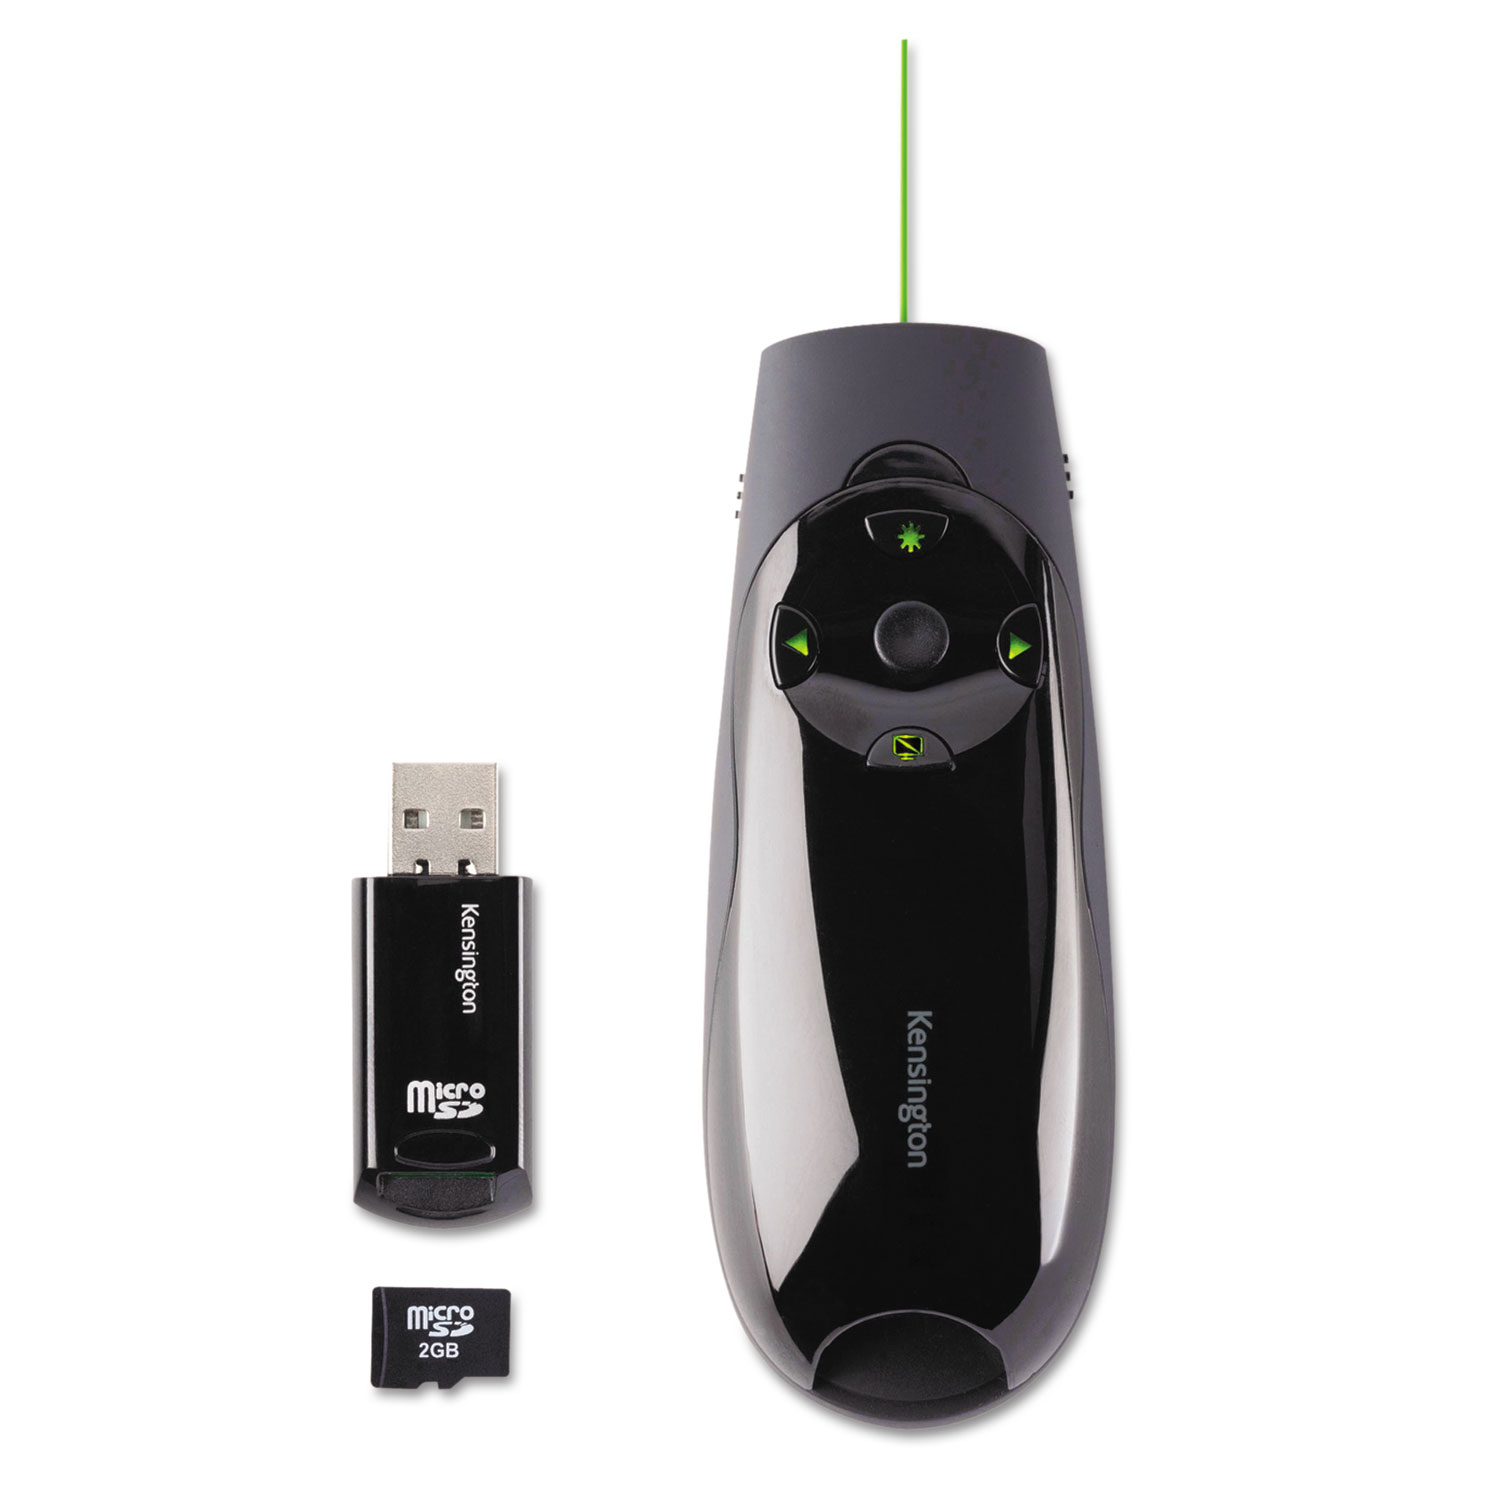 Presenter Expert Green Laser Wireless Presenter with 2 GB Dongle, Class 2, Black